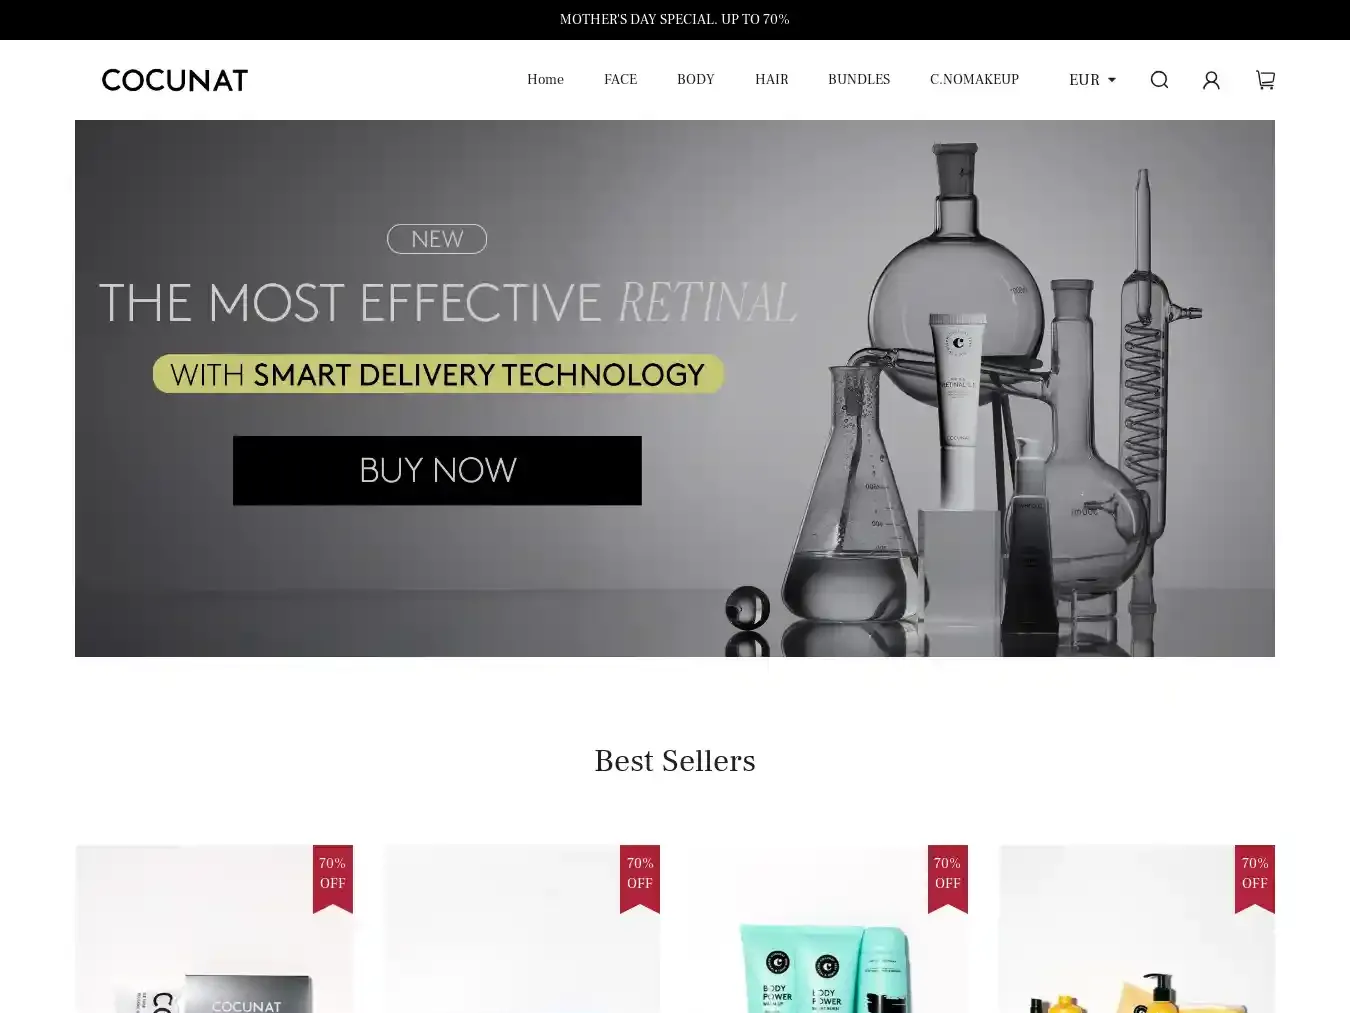 Cocunat-eu.shop Fraudulent Non-Delivery website.